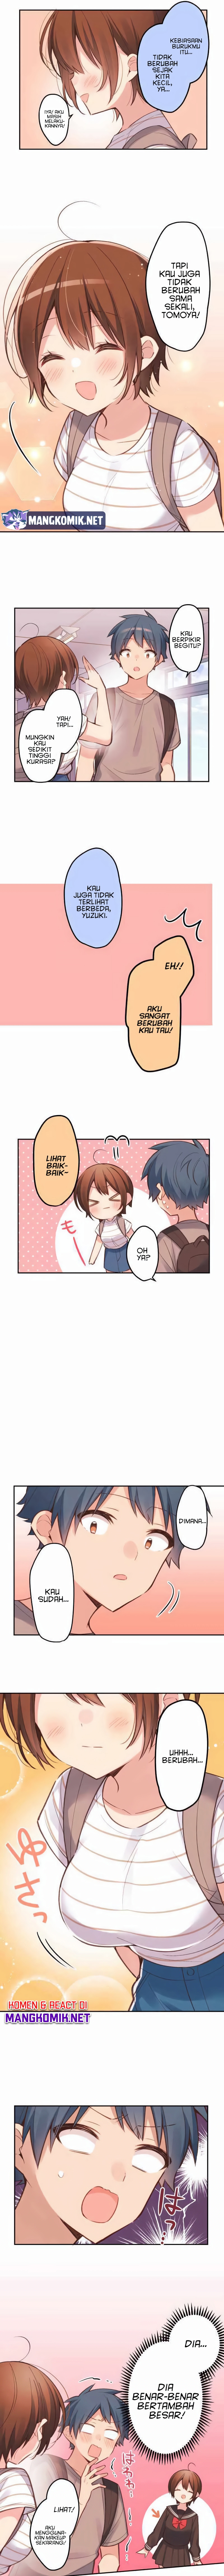 Waka-chan Is Flirty Again Chapter 21 5